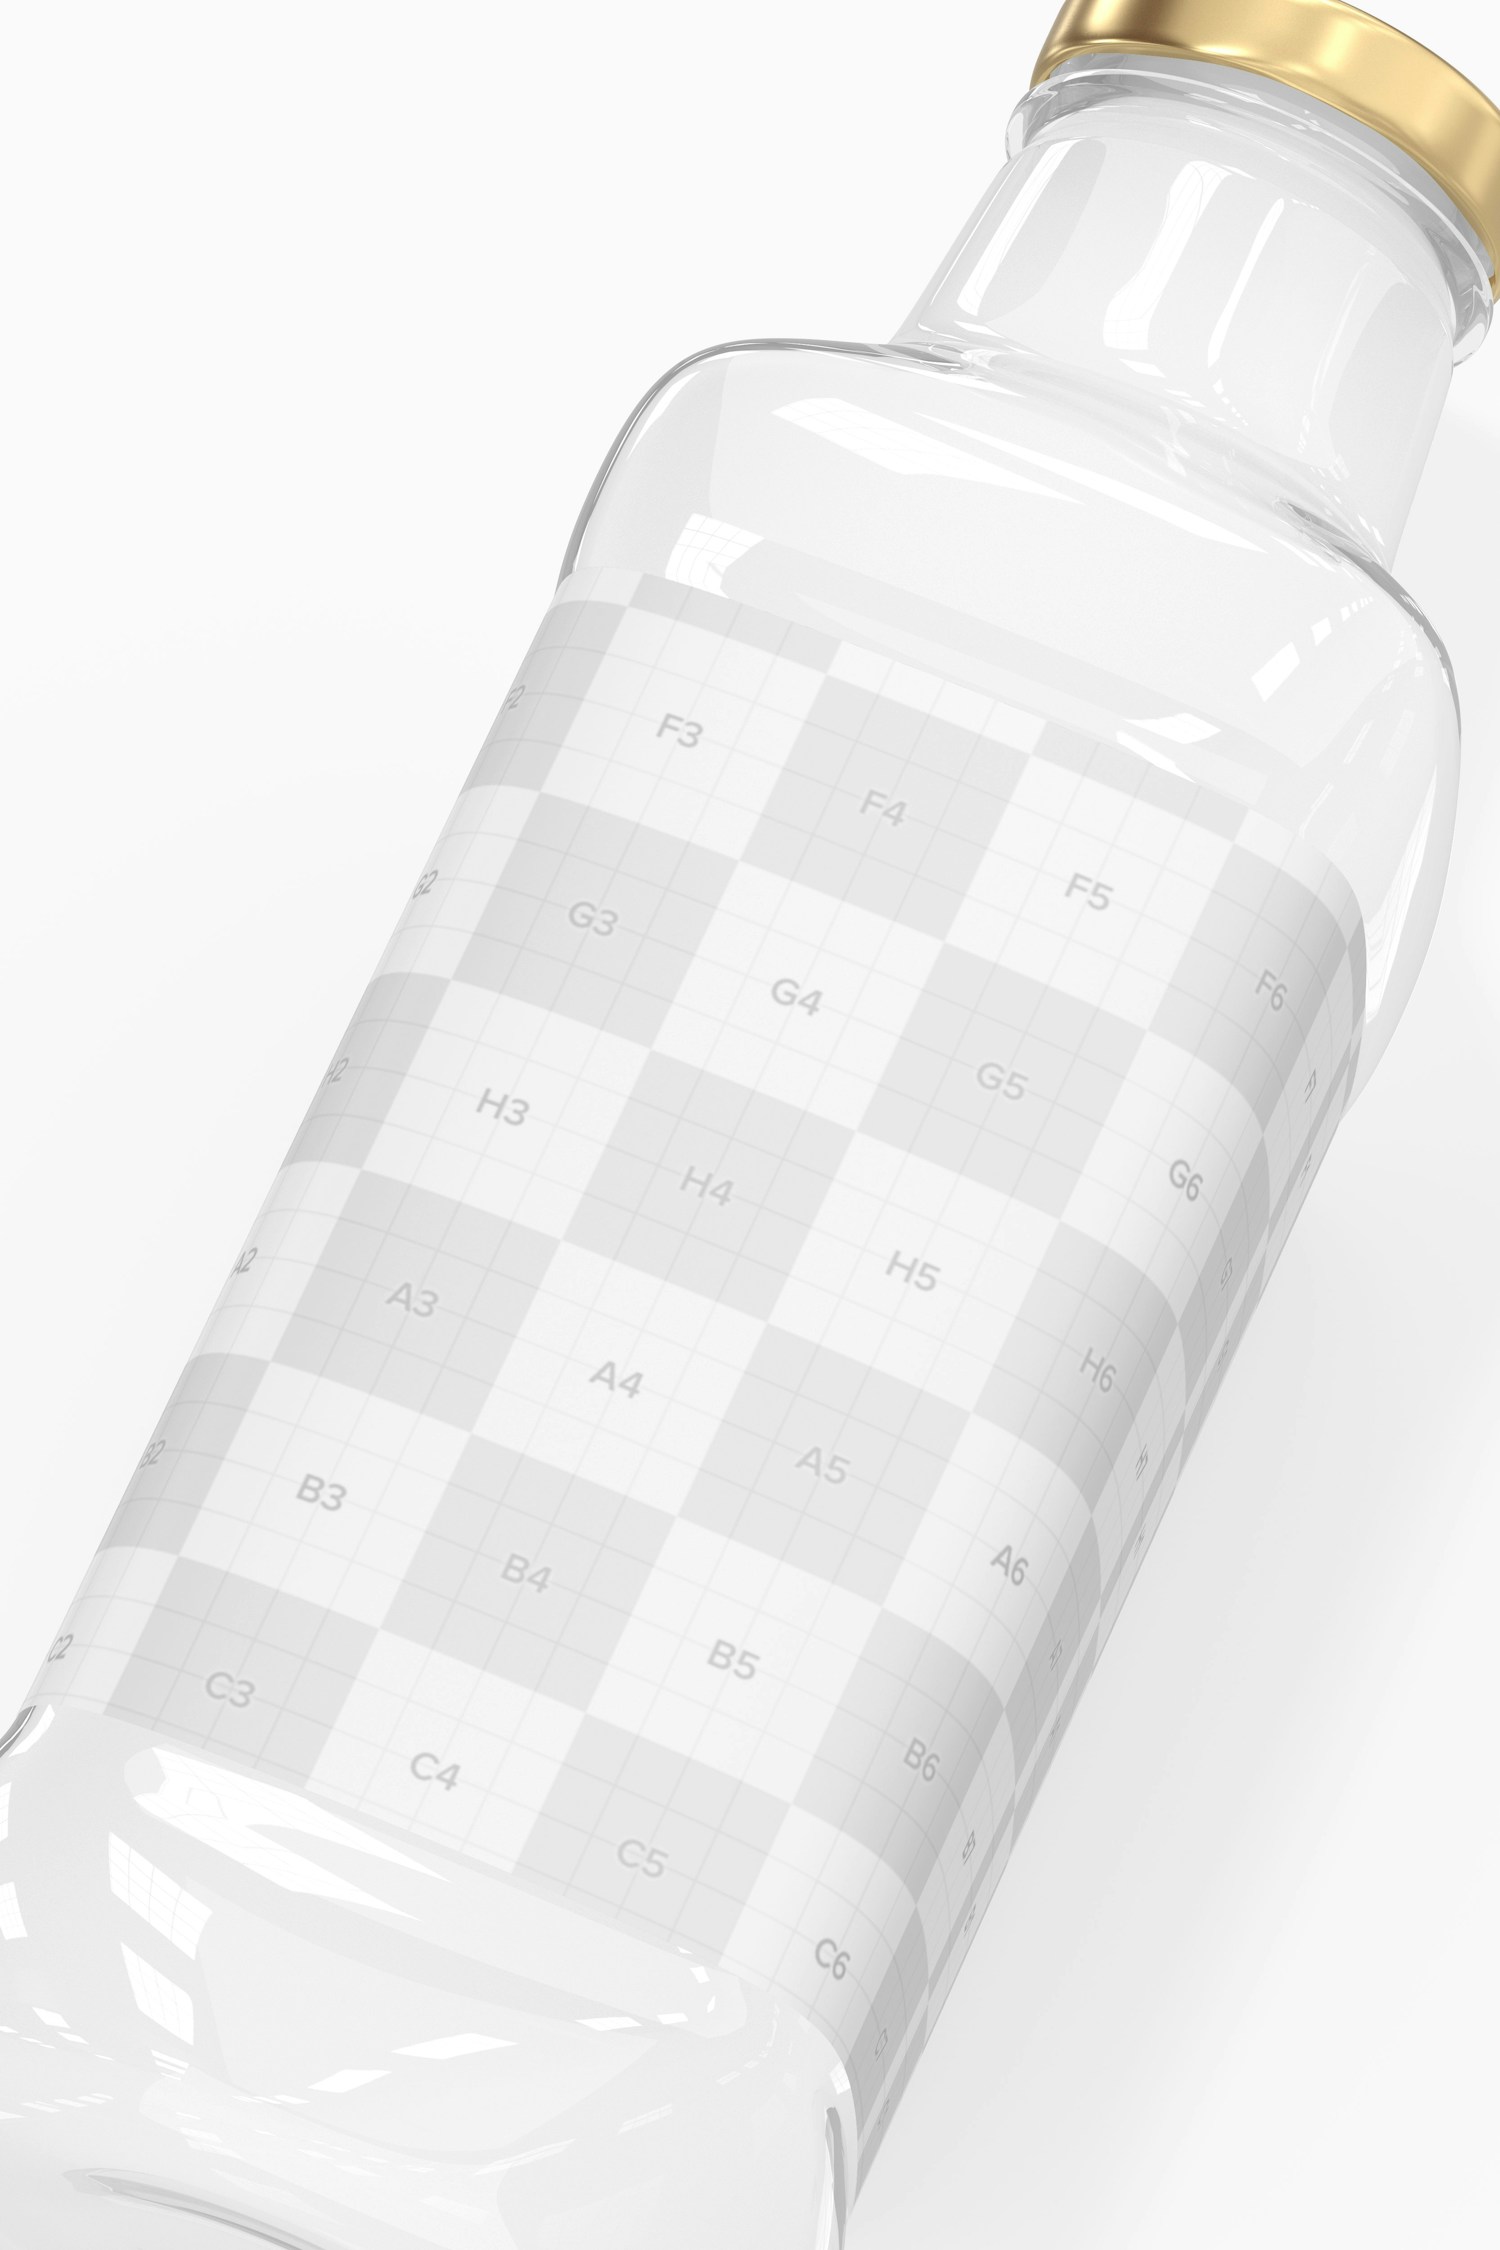 16 oz Glass Juice Bottle Mockup, Close Up